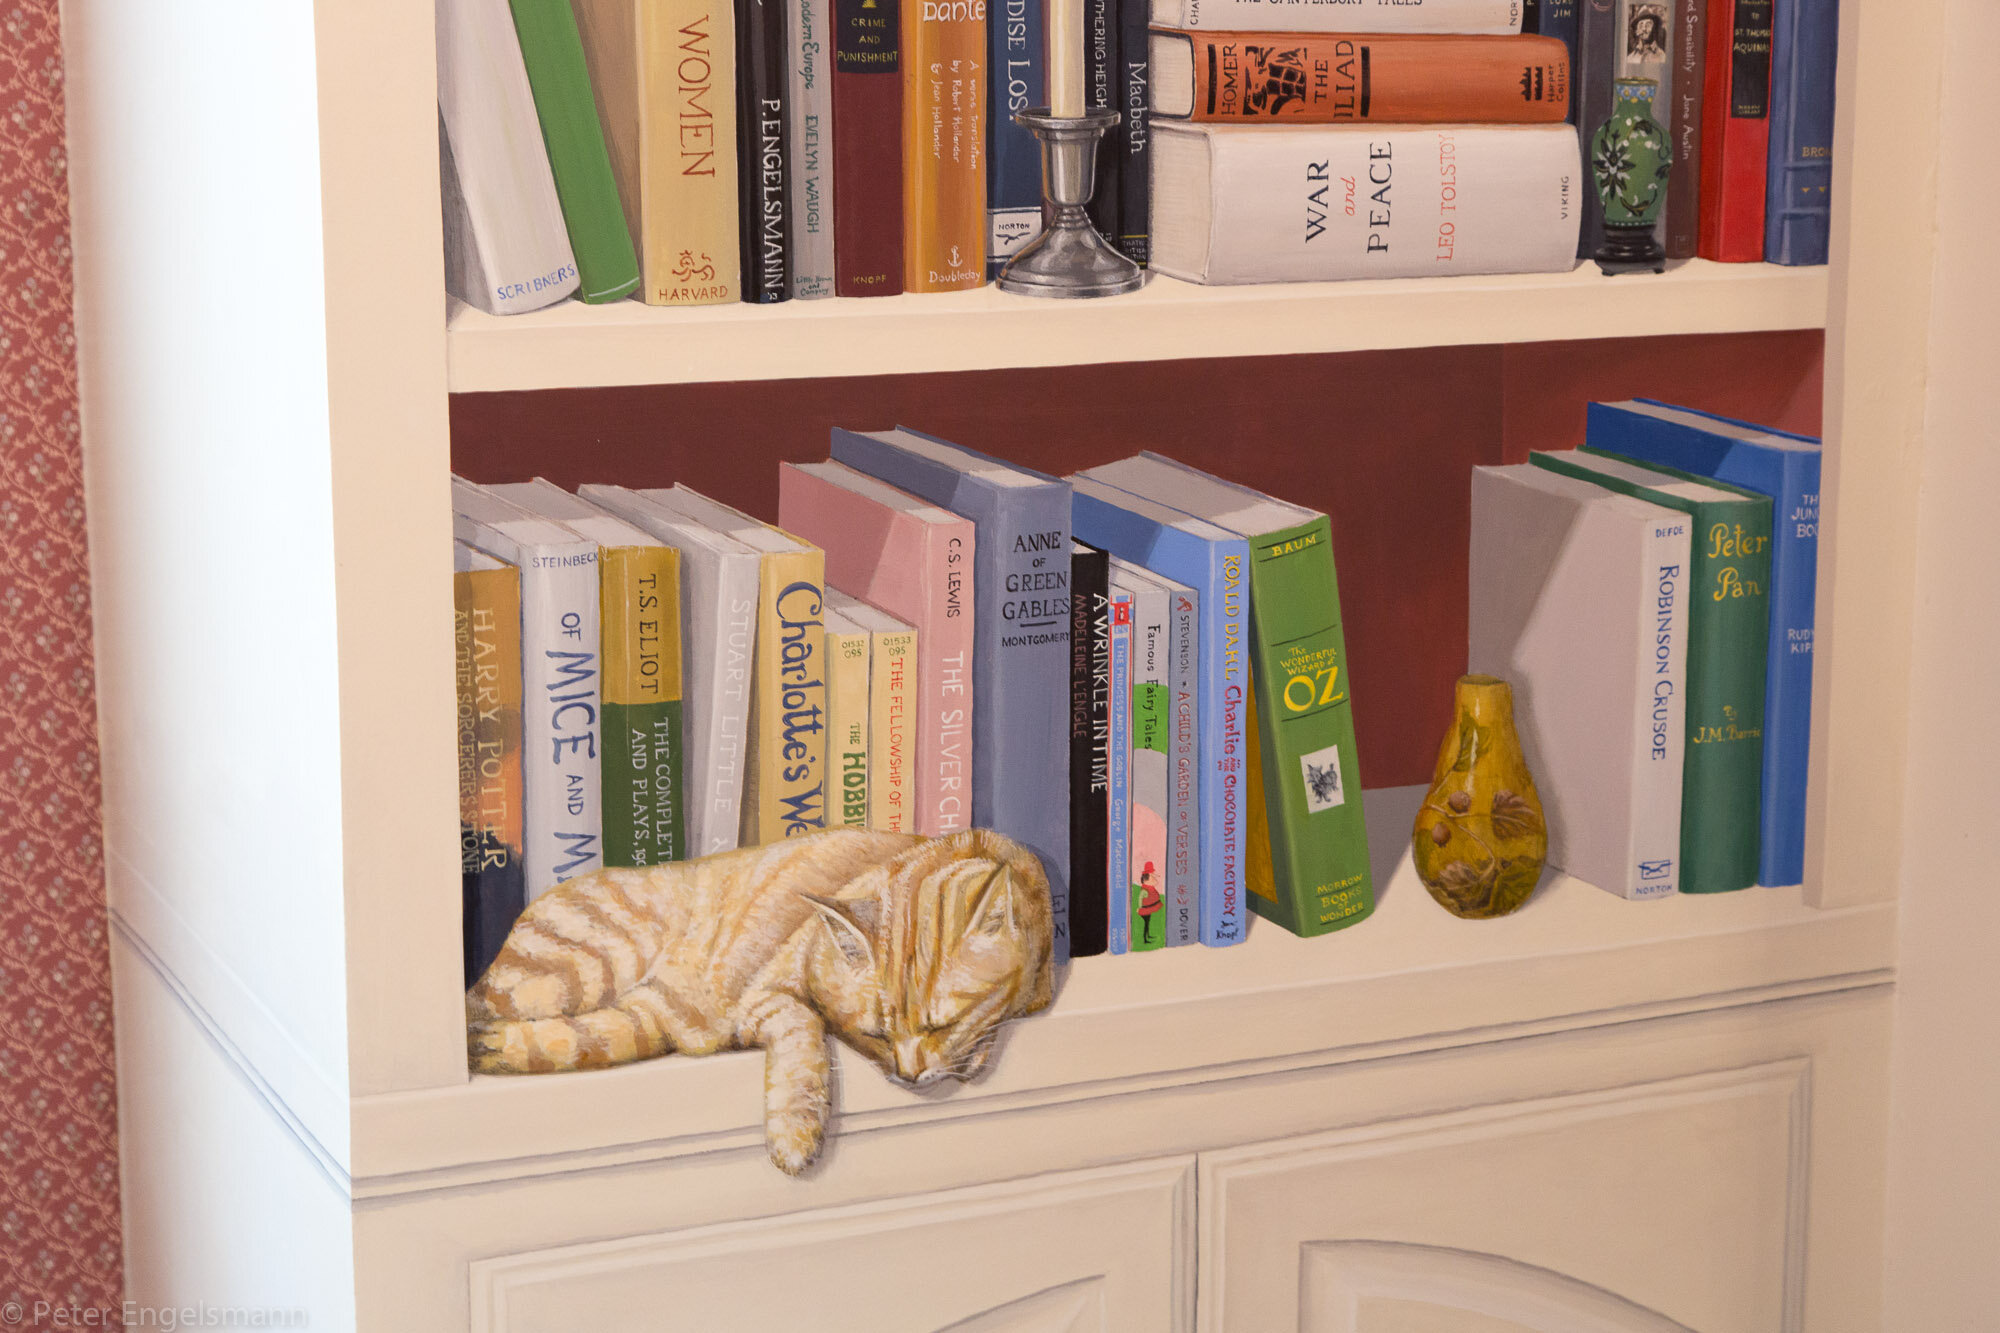  Trompe l’oeil Bookshelf Mural, acrylic on wallboard, private residence. © Peter K. Engelsmann 